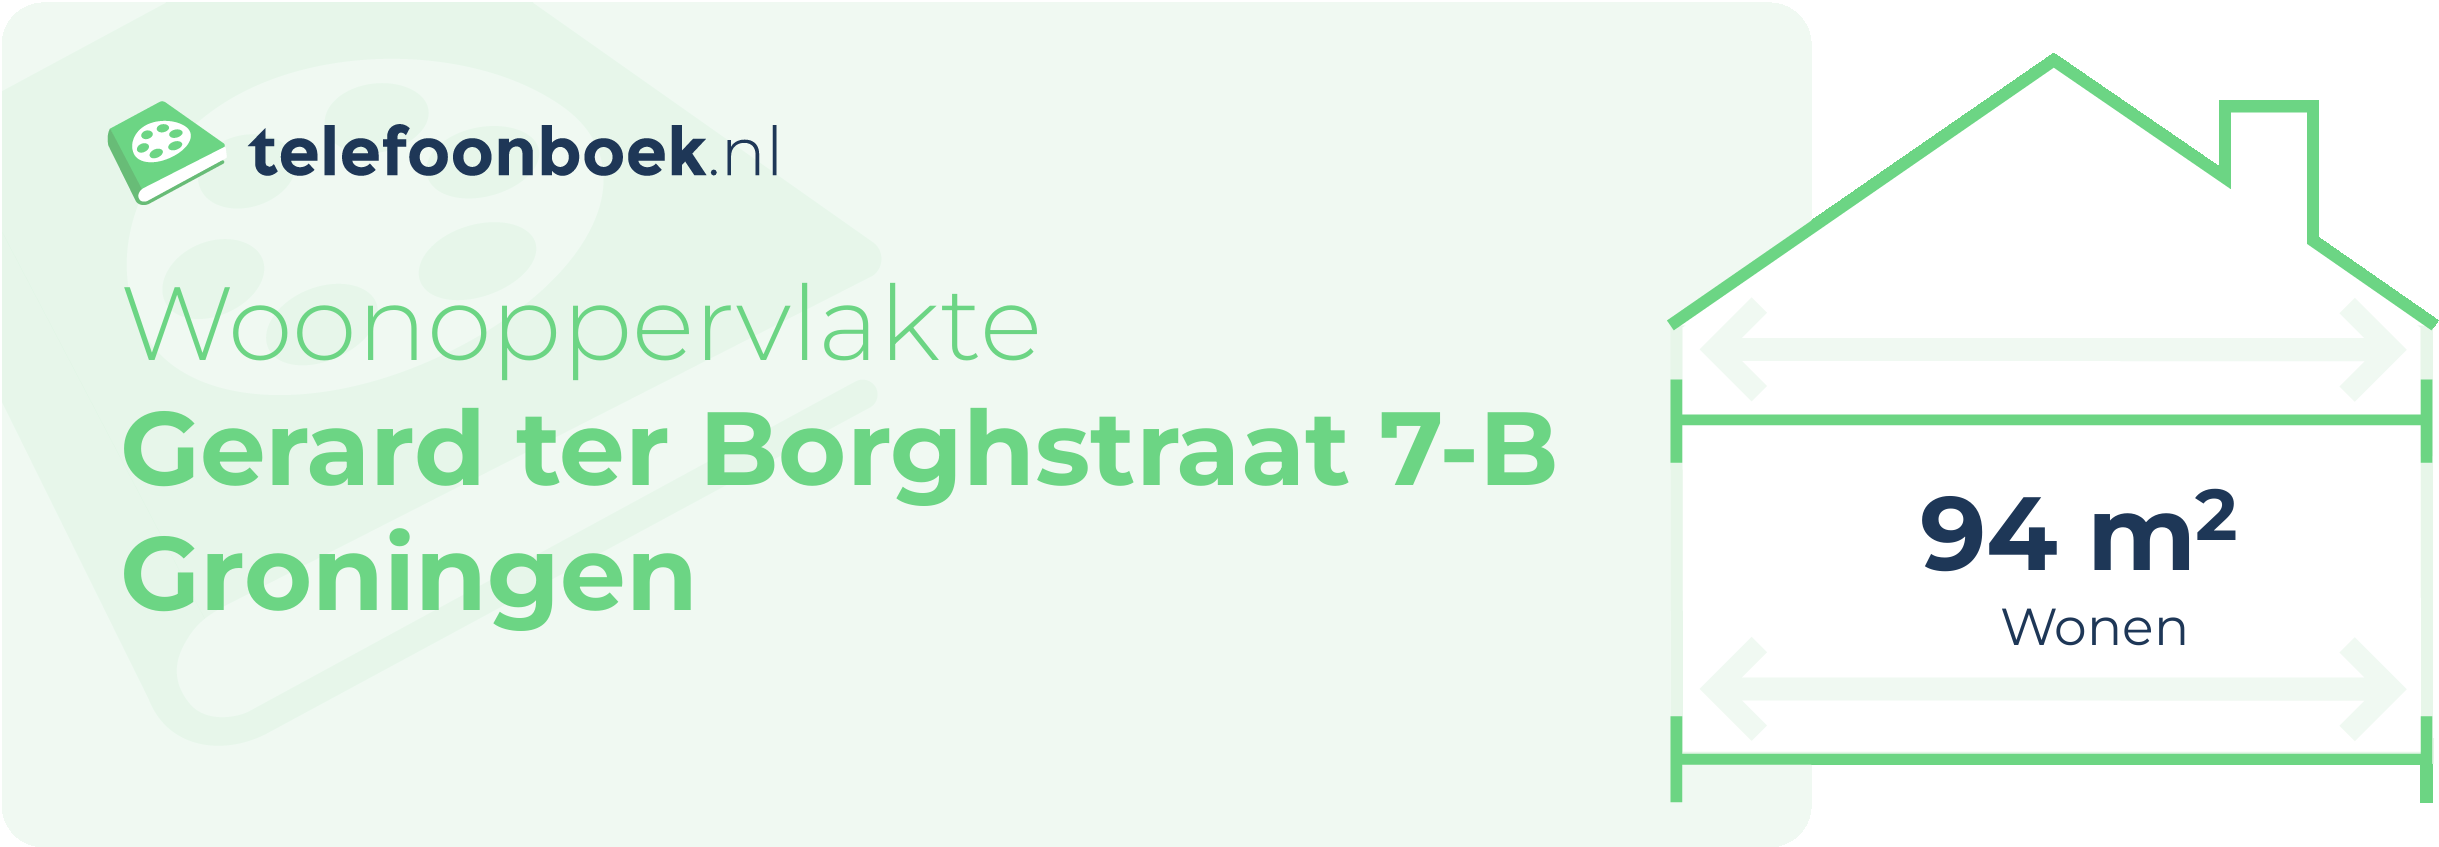 Woonoppervlakte Gerard Ter Borghstraat 7-B Groningen